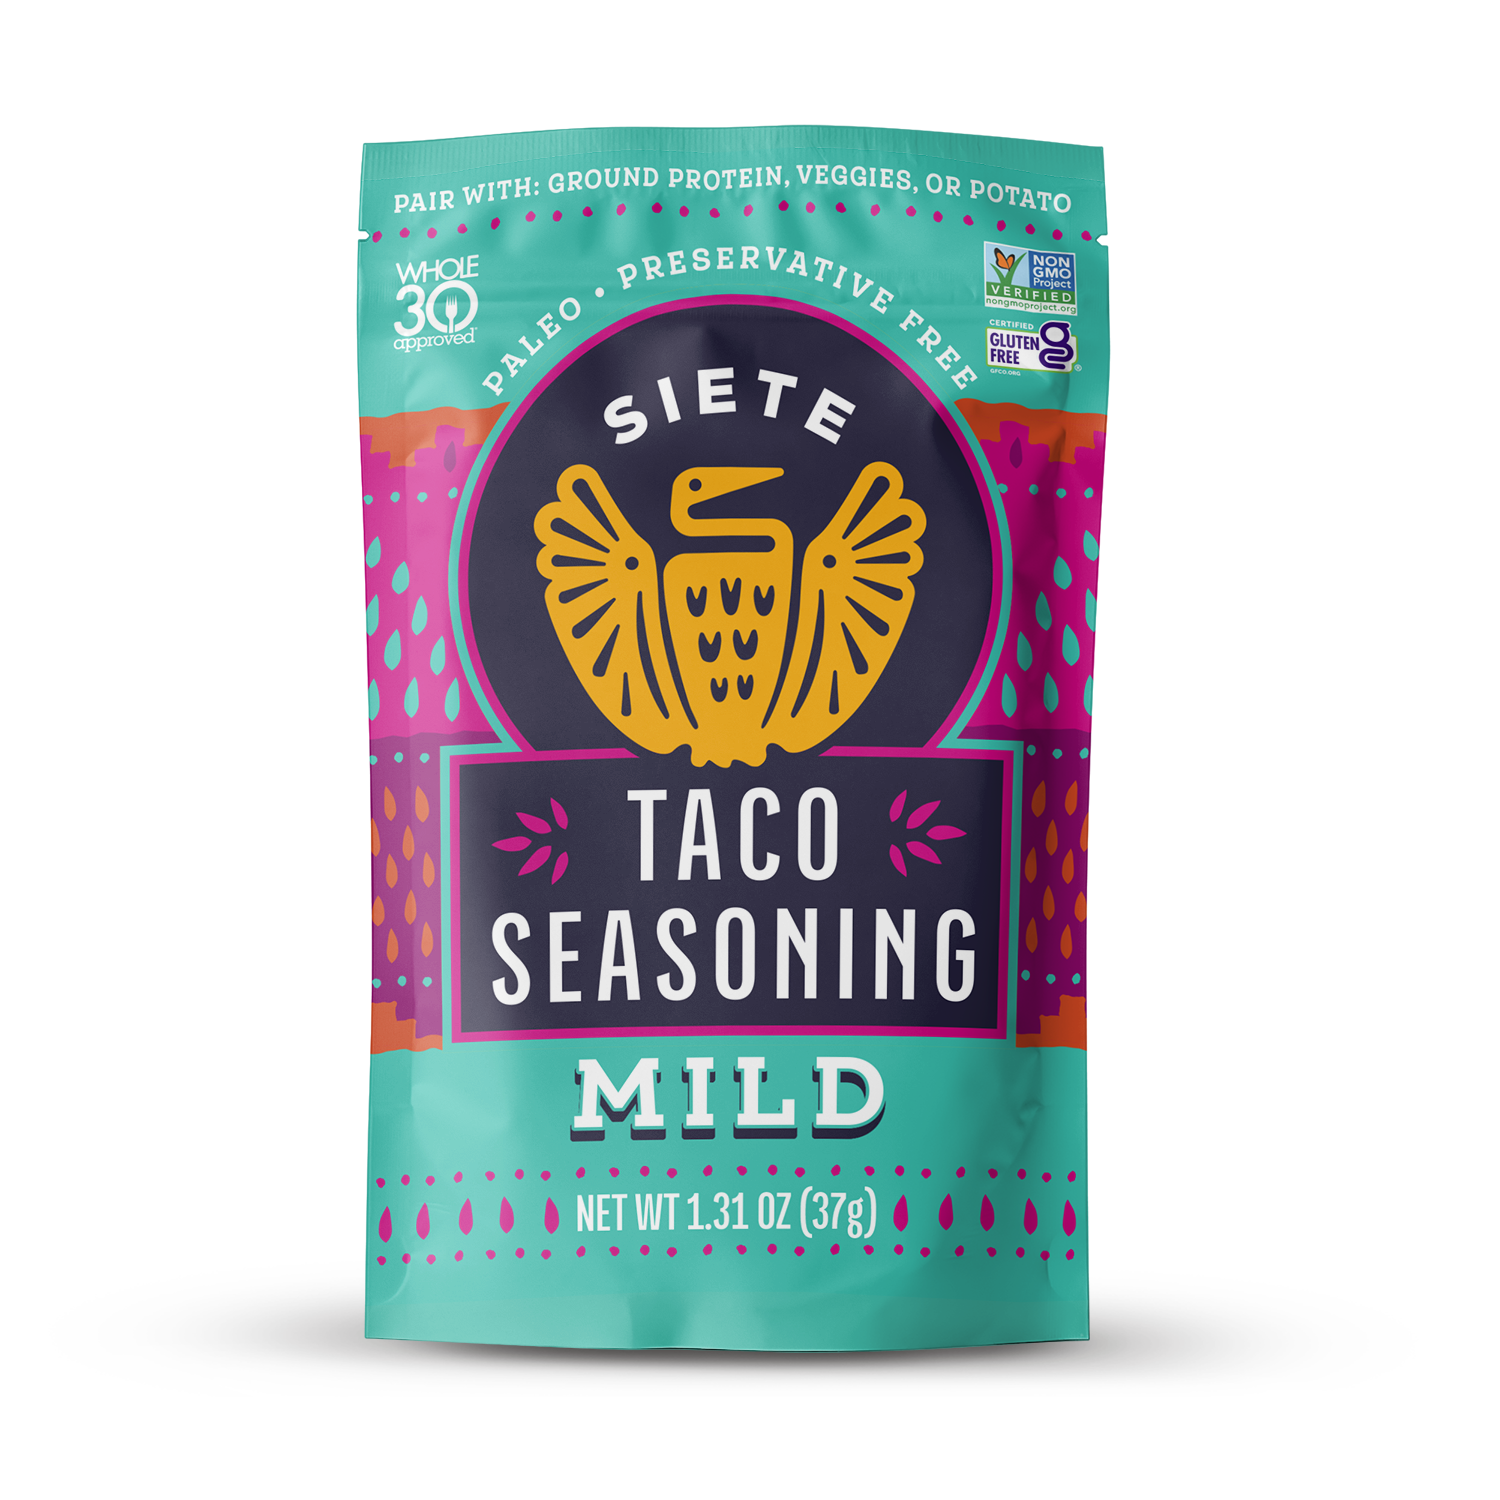 Mild Taco Seasoning - 6 pack